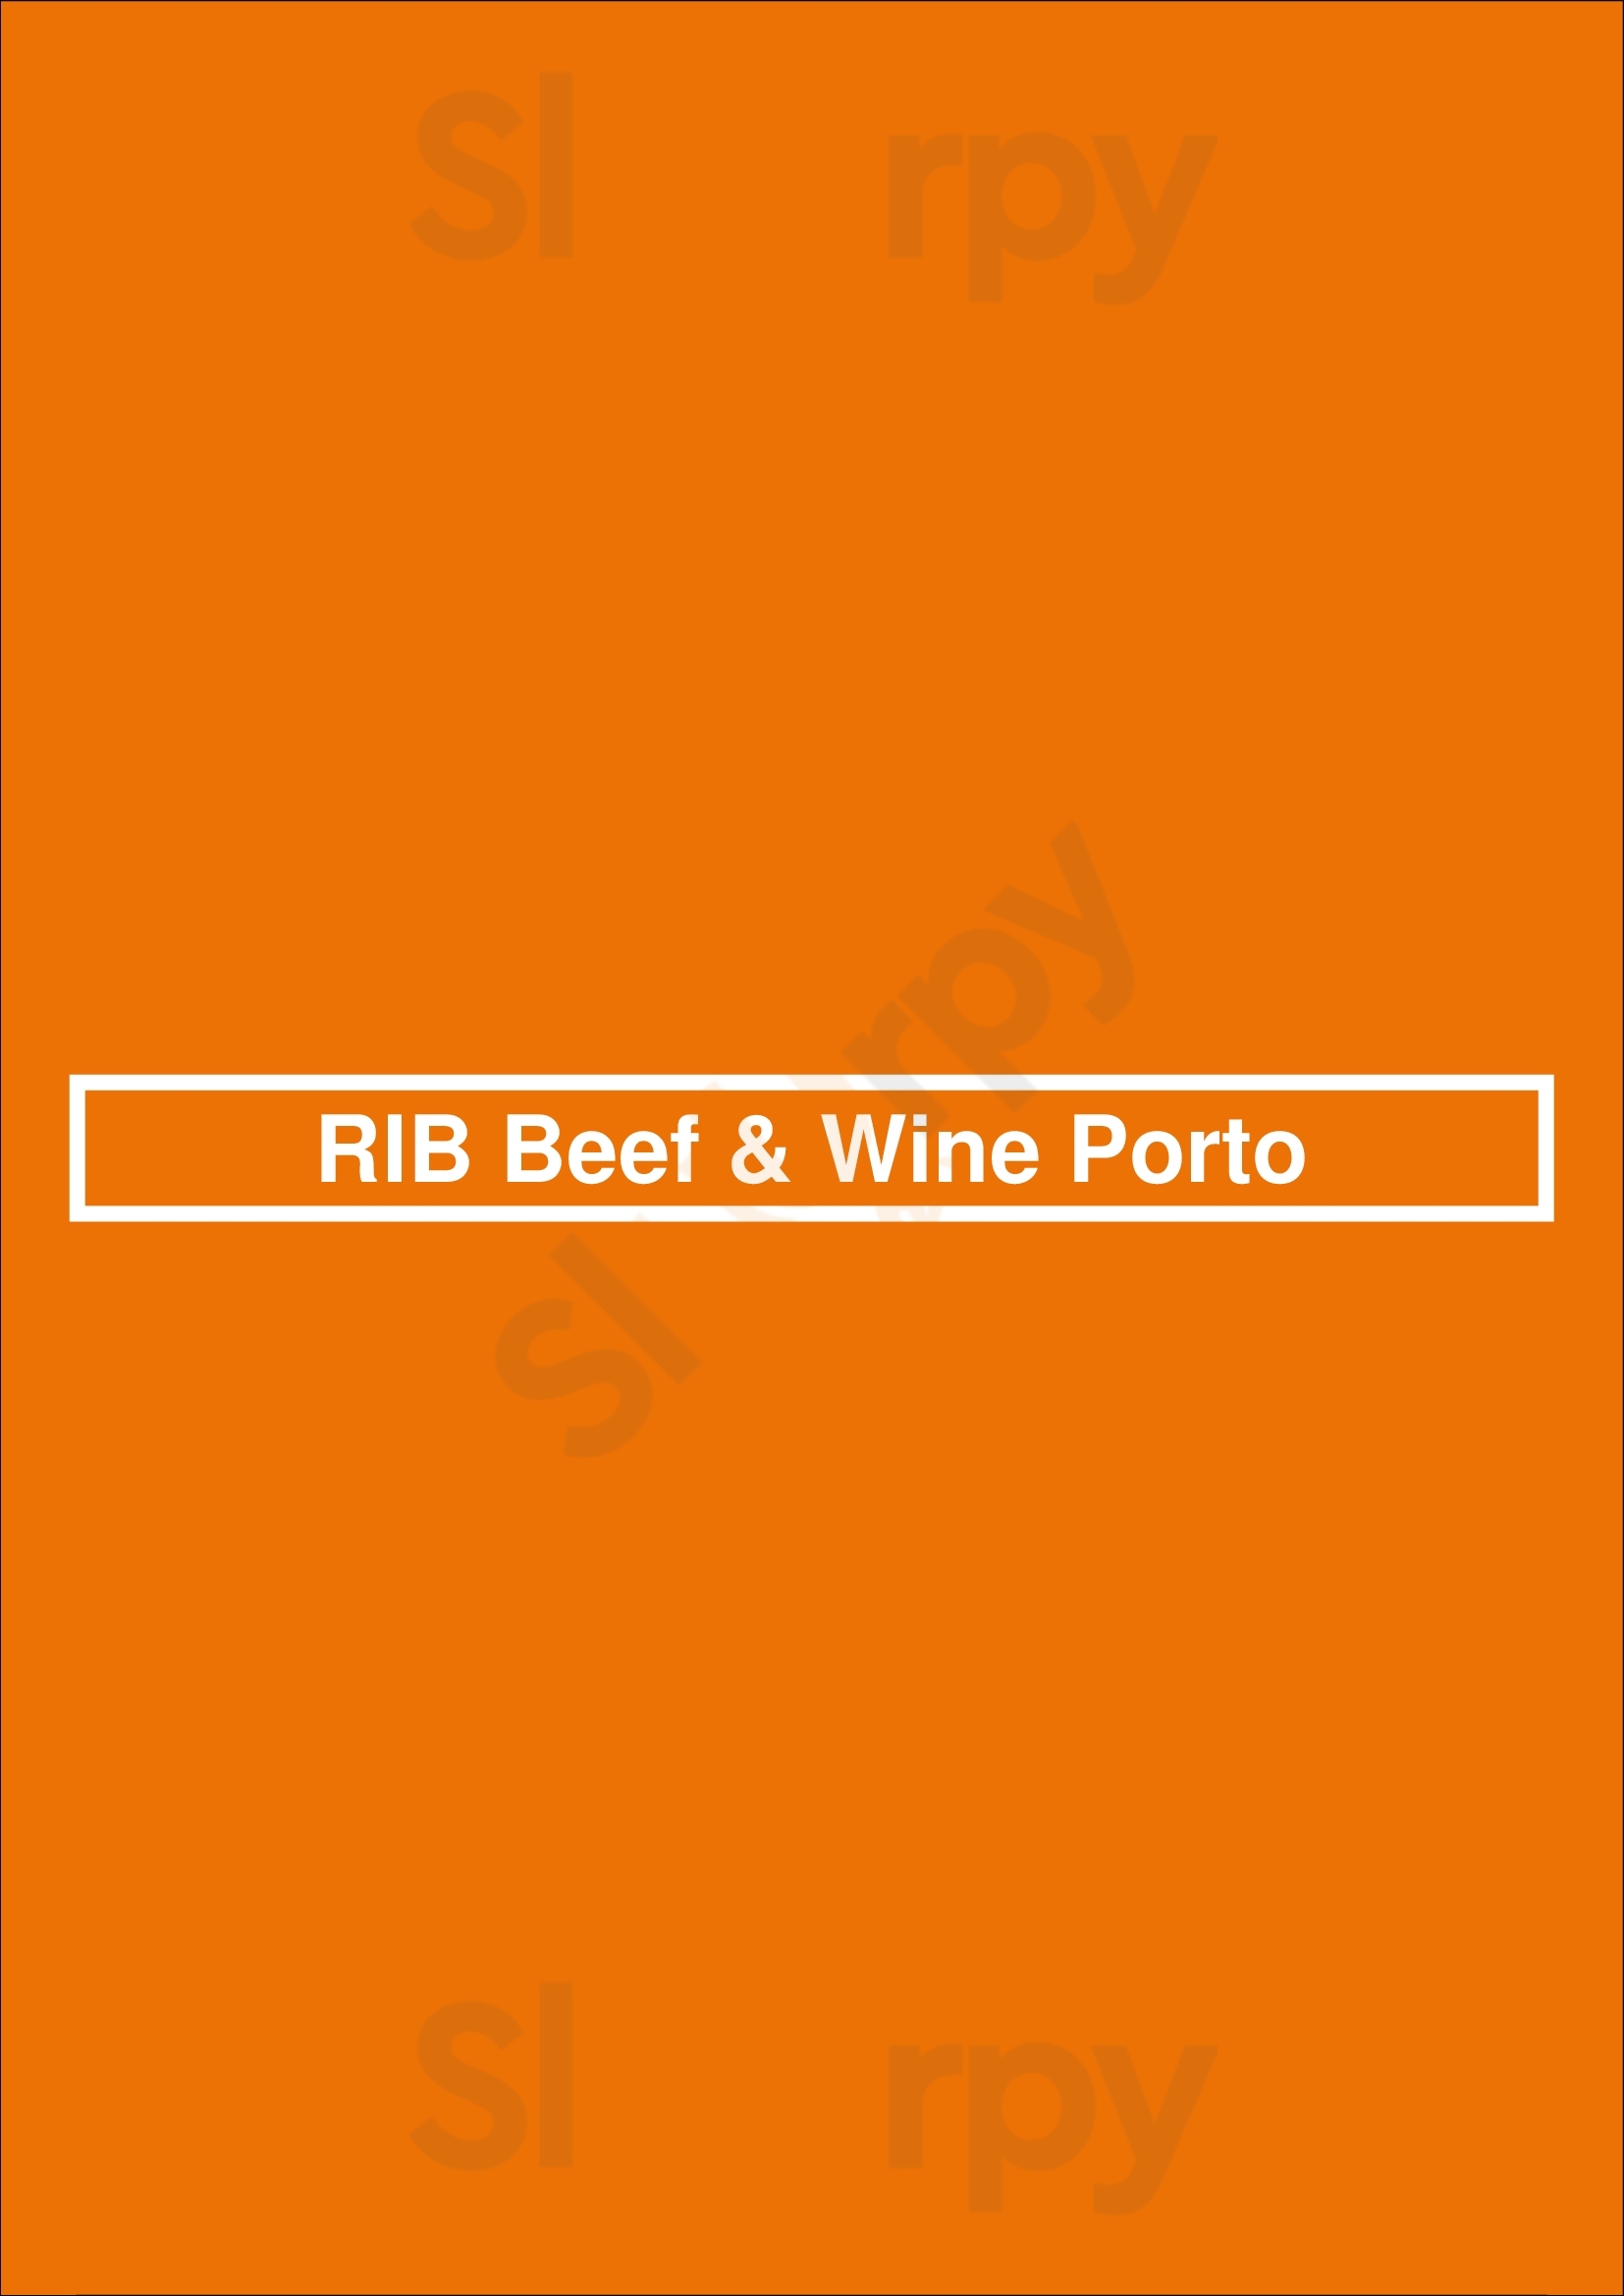 Rib Beef & Wine Porto Porto Menu - 1